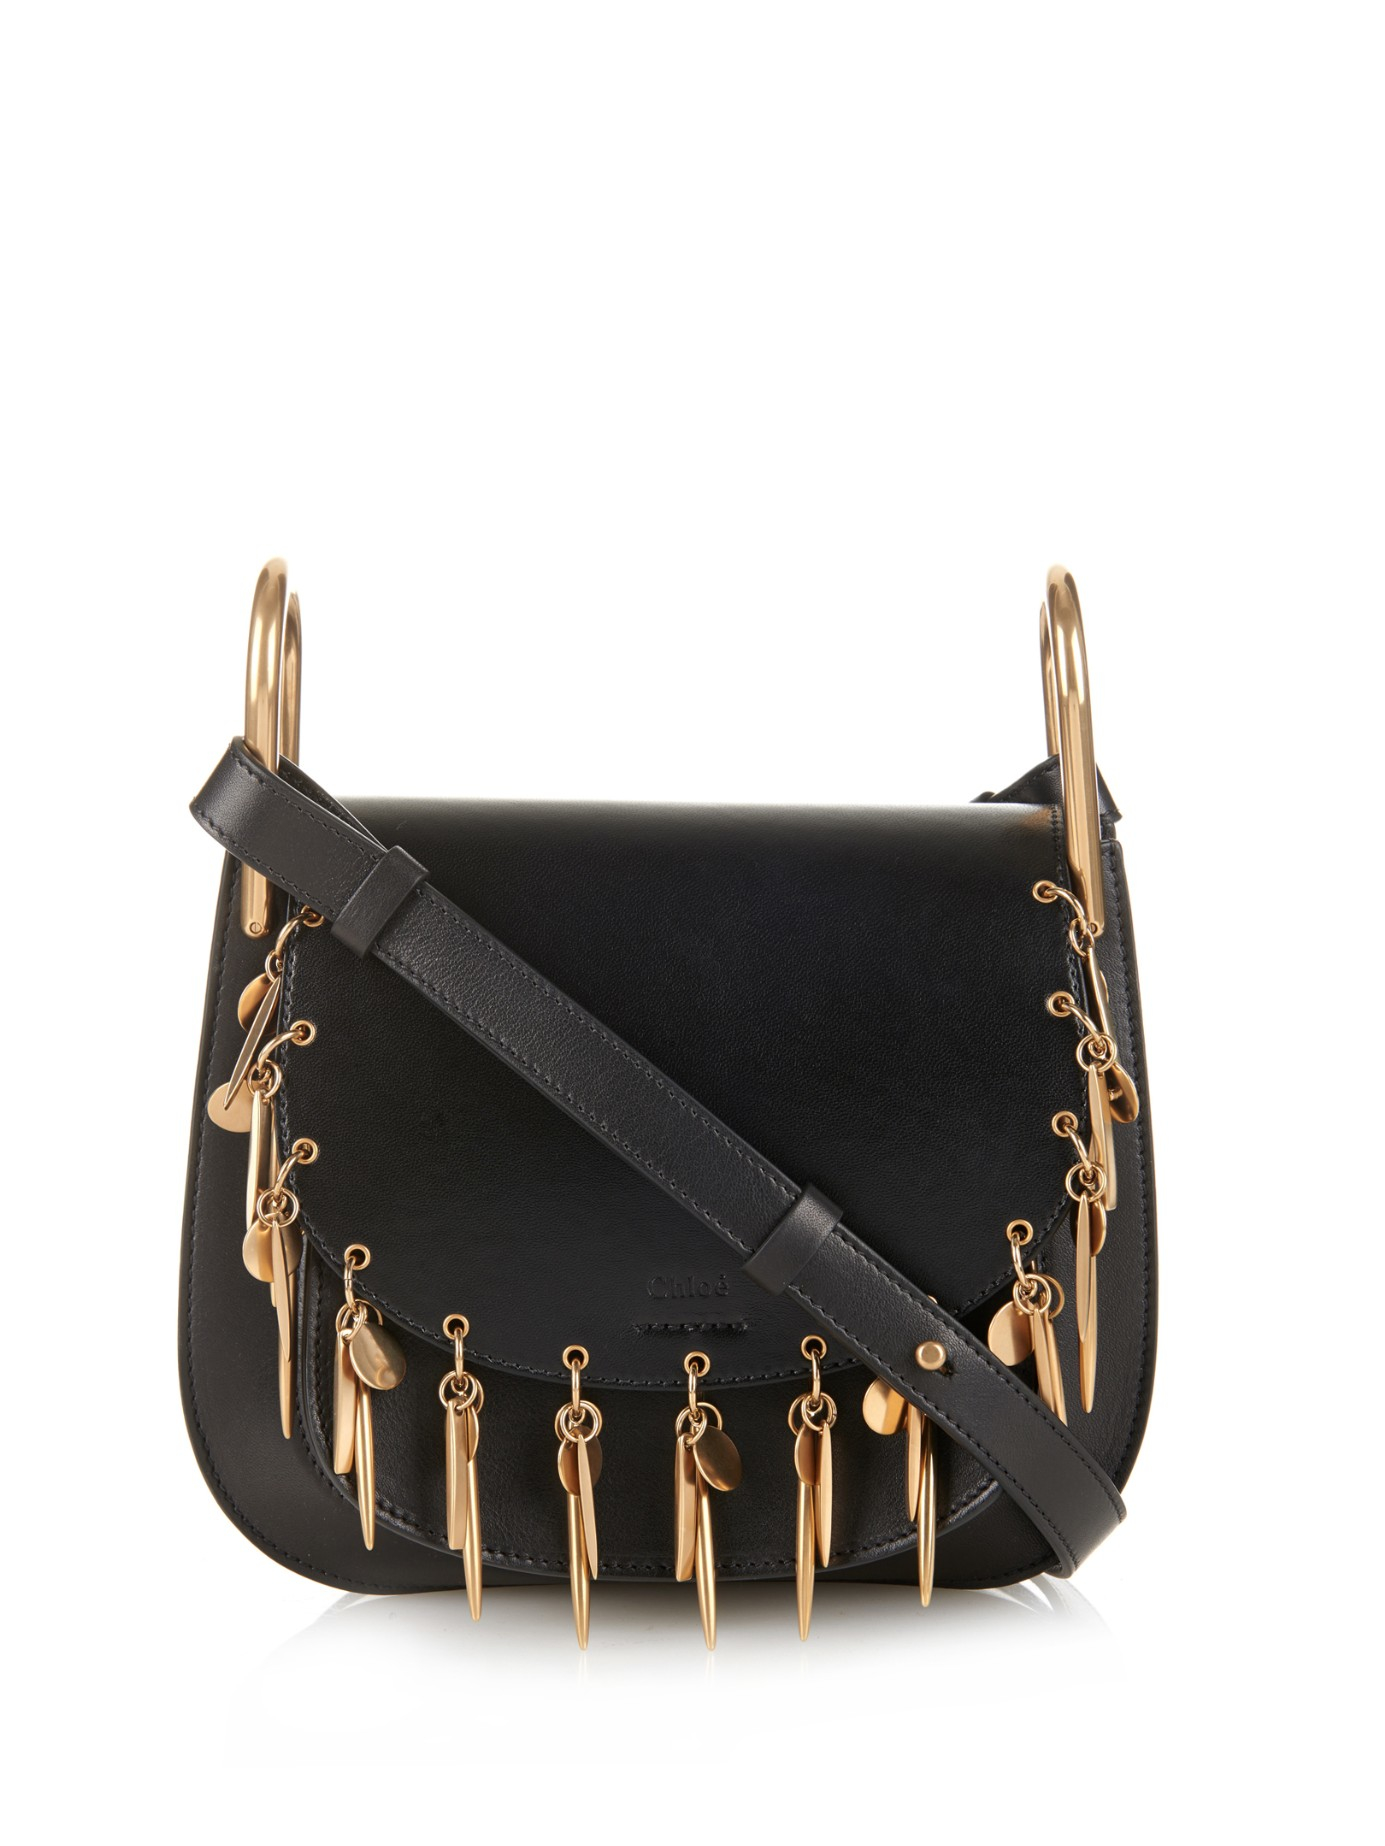 Chloé Hudson Small Leather Cross-body Bag in Black | Lyst